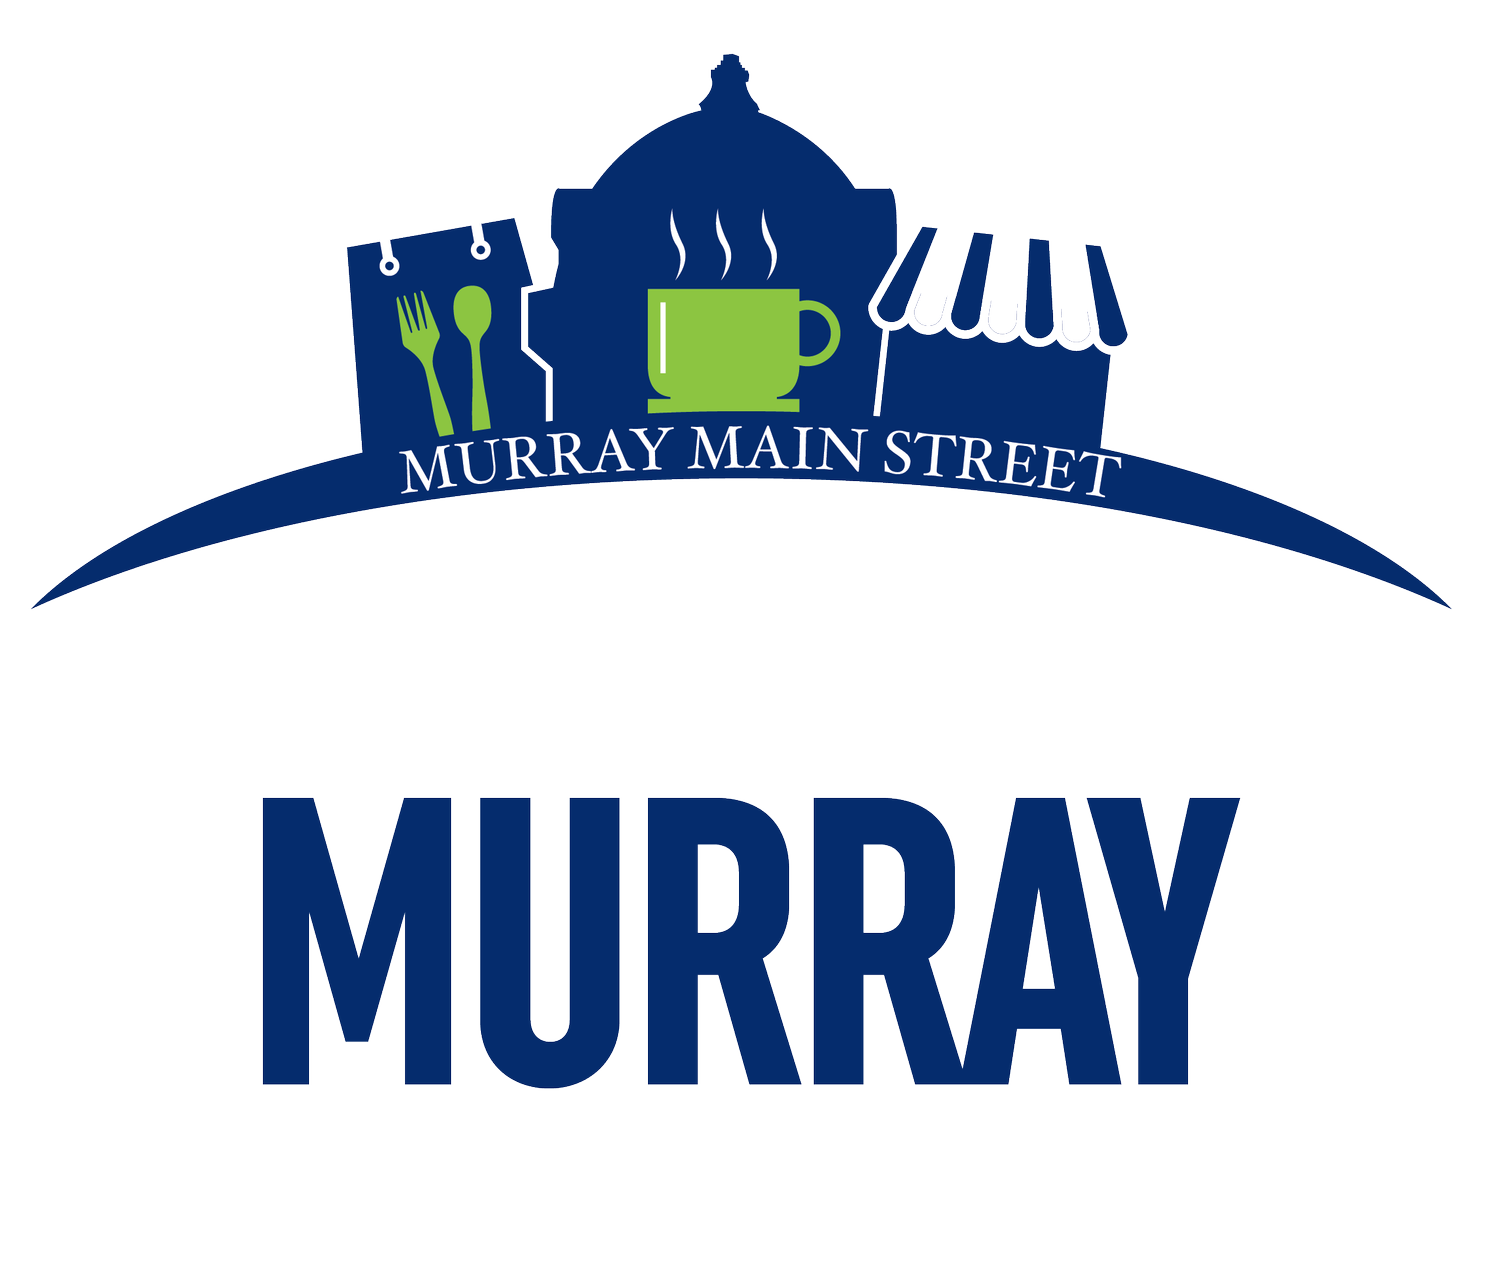 Murray Main Street